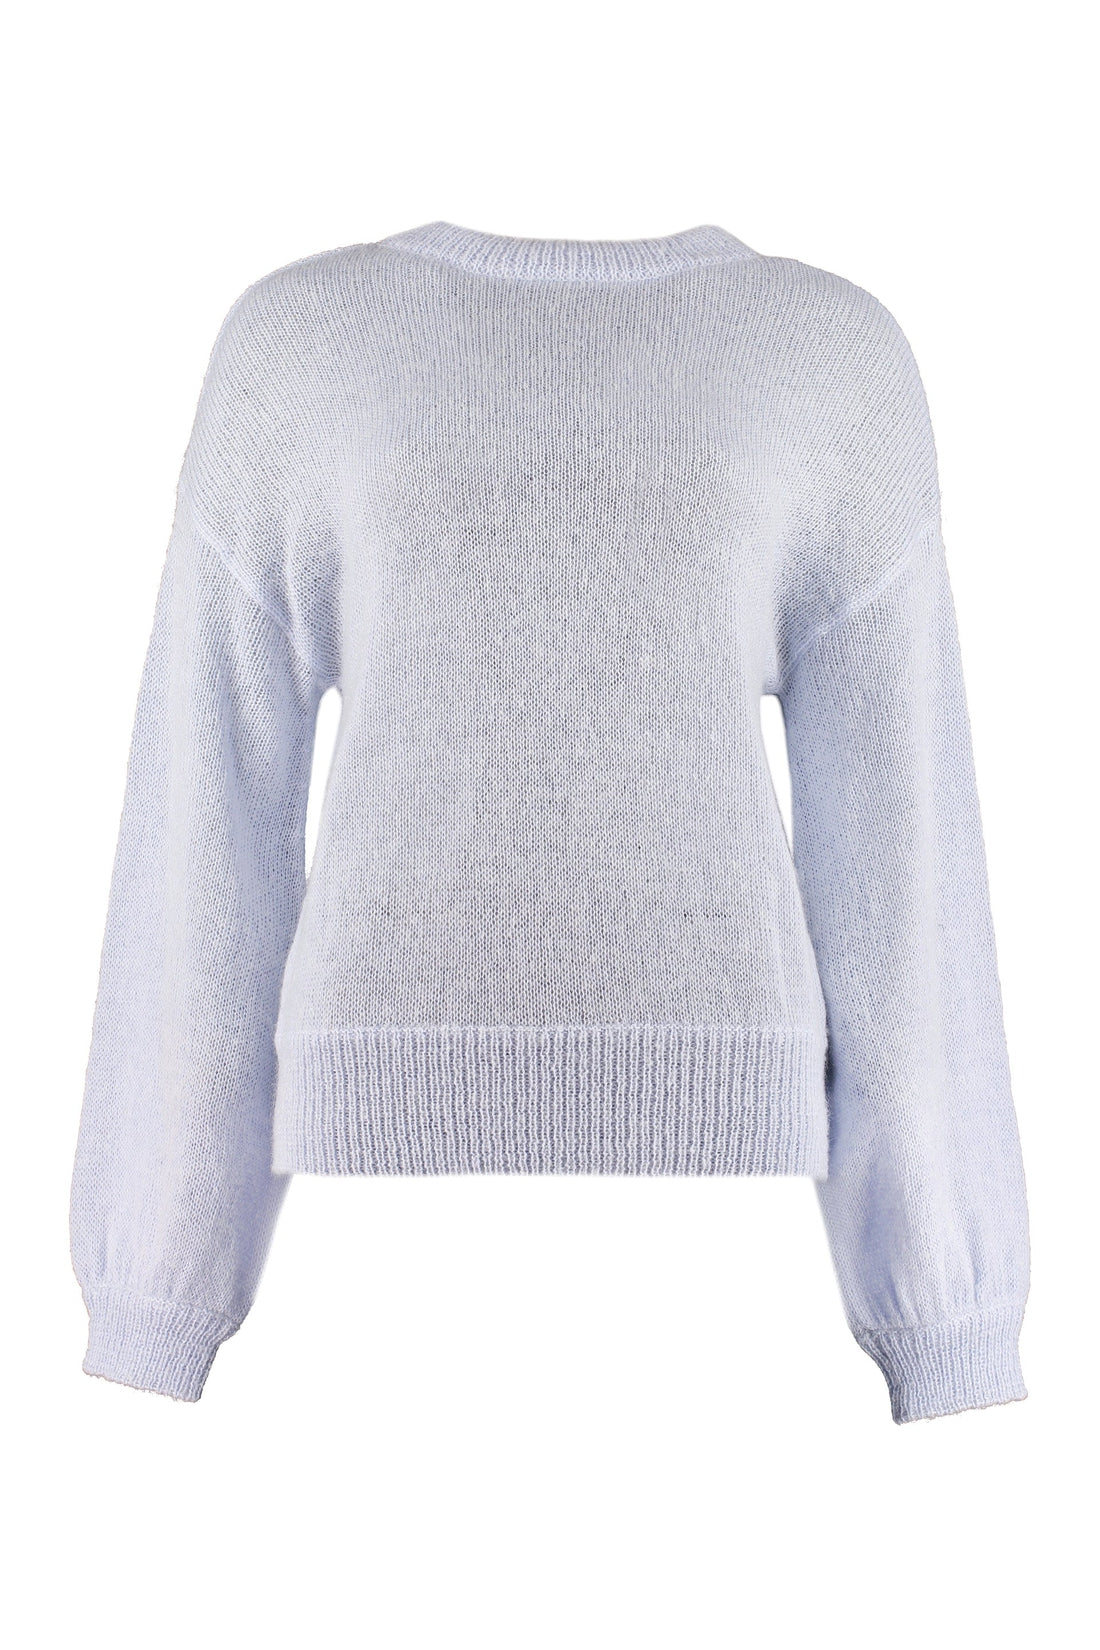 Pinko-OUTLET-SALE-Ecuador long sleeve sweater-ARCHIVIST